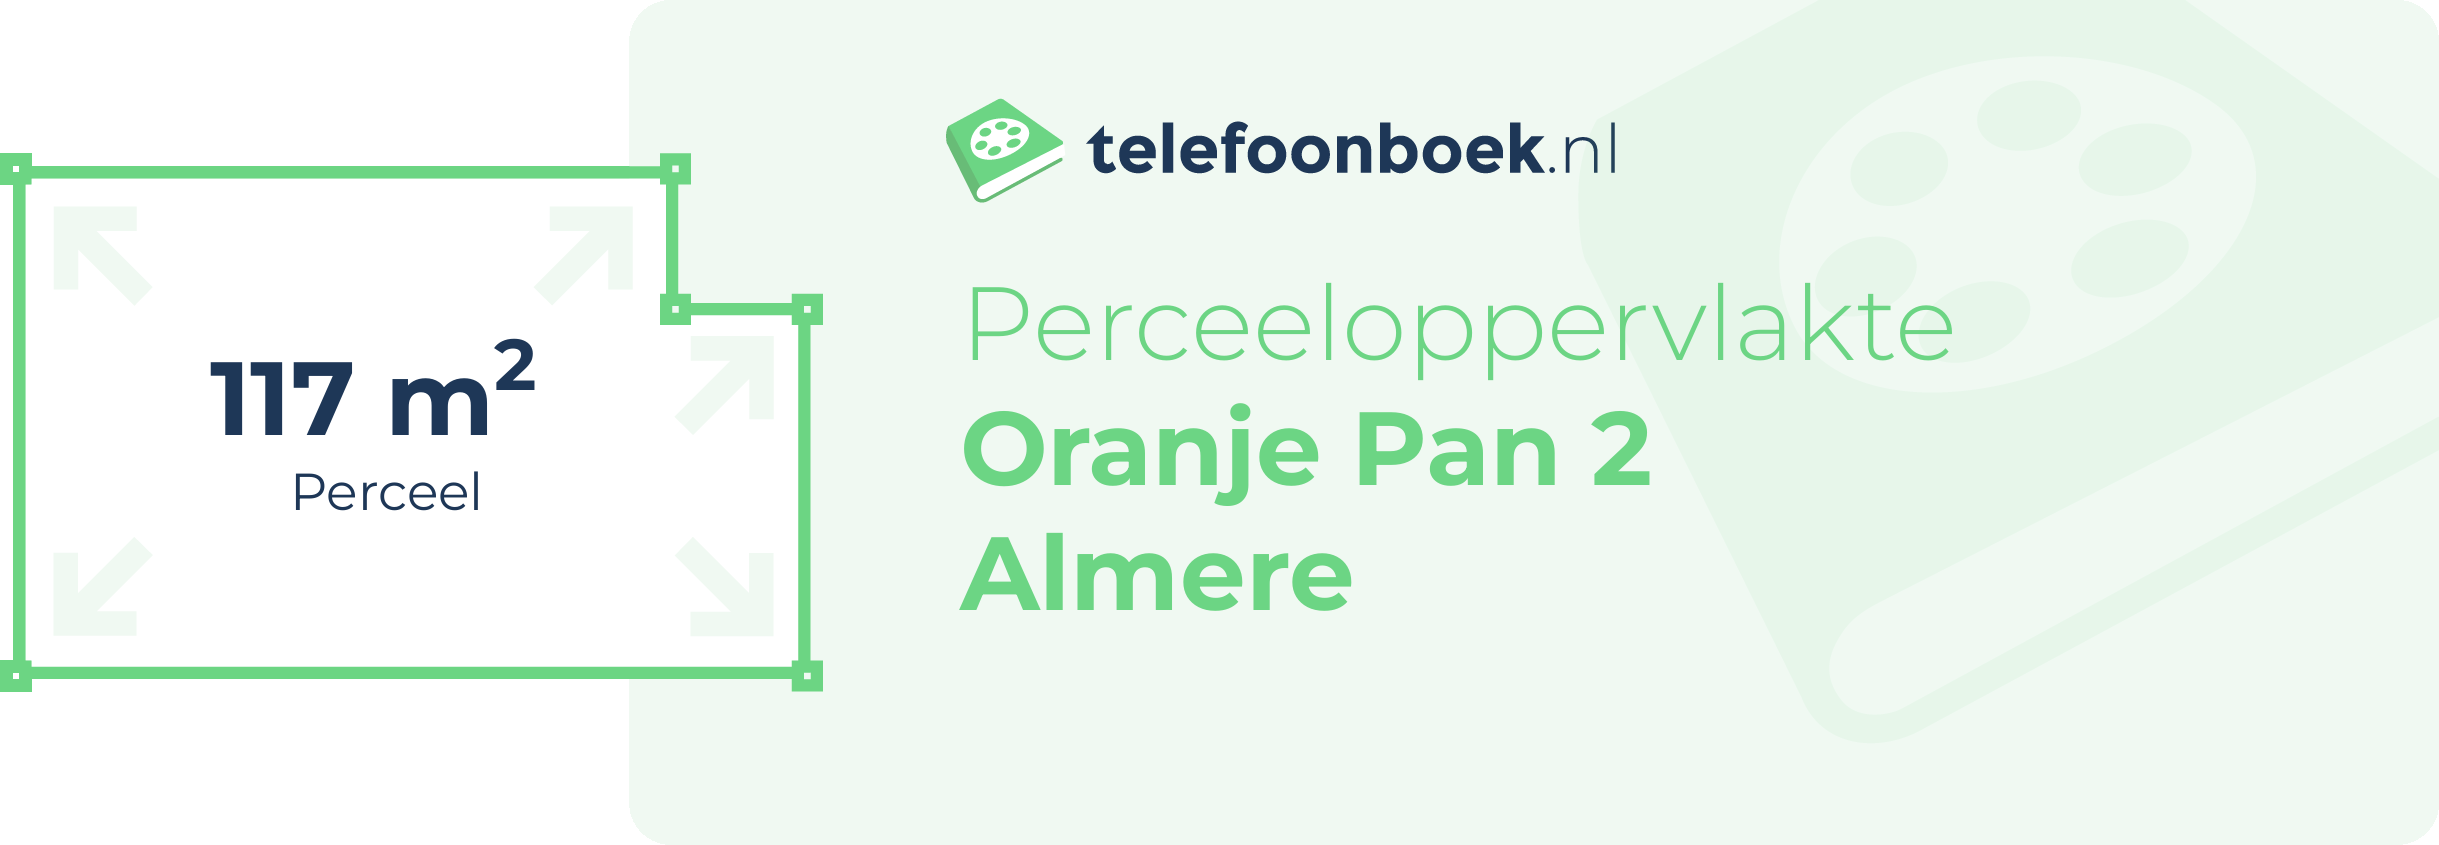 Perceeloppervlakte Oranje Pan 2 Almere